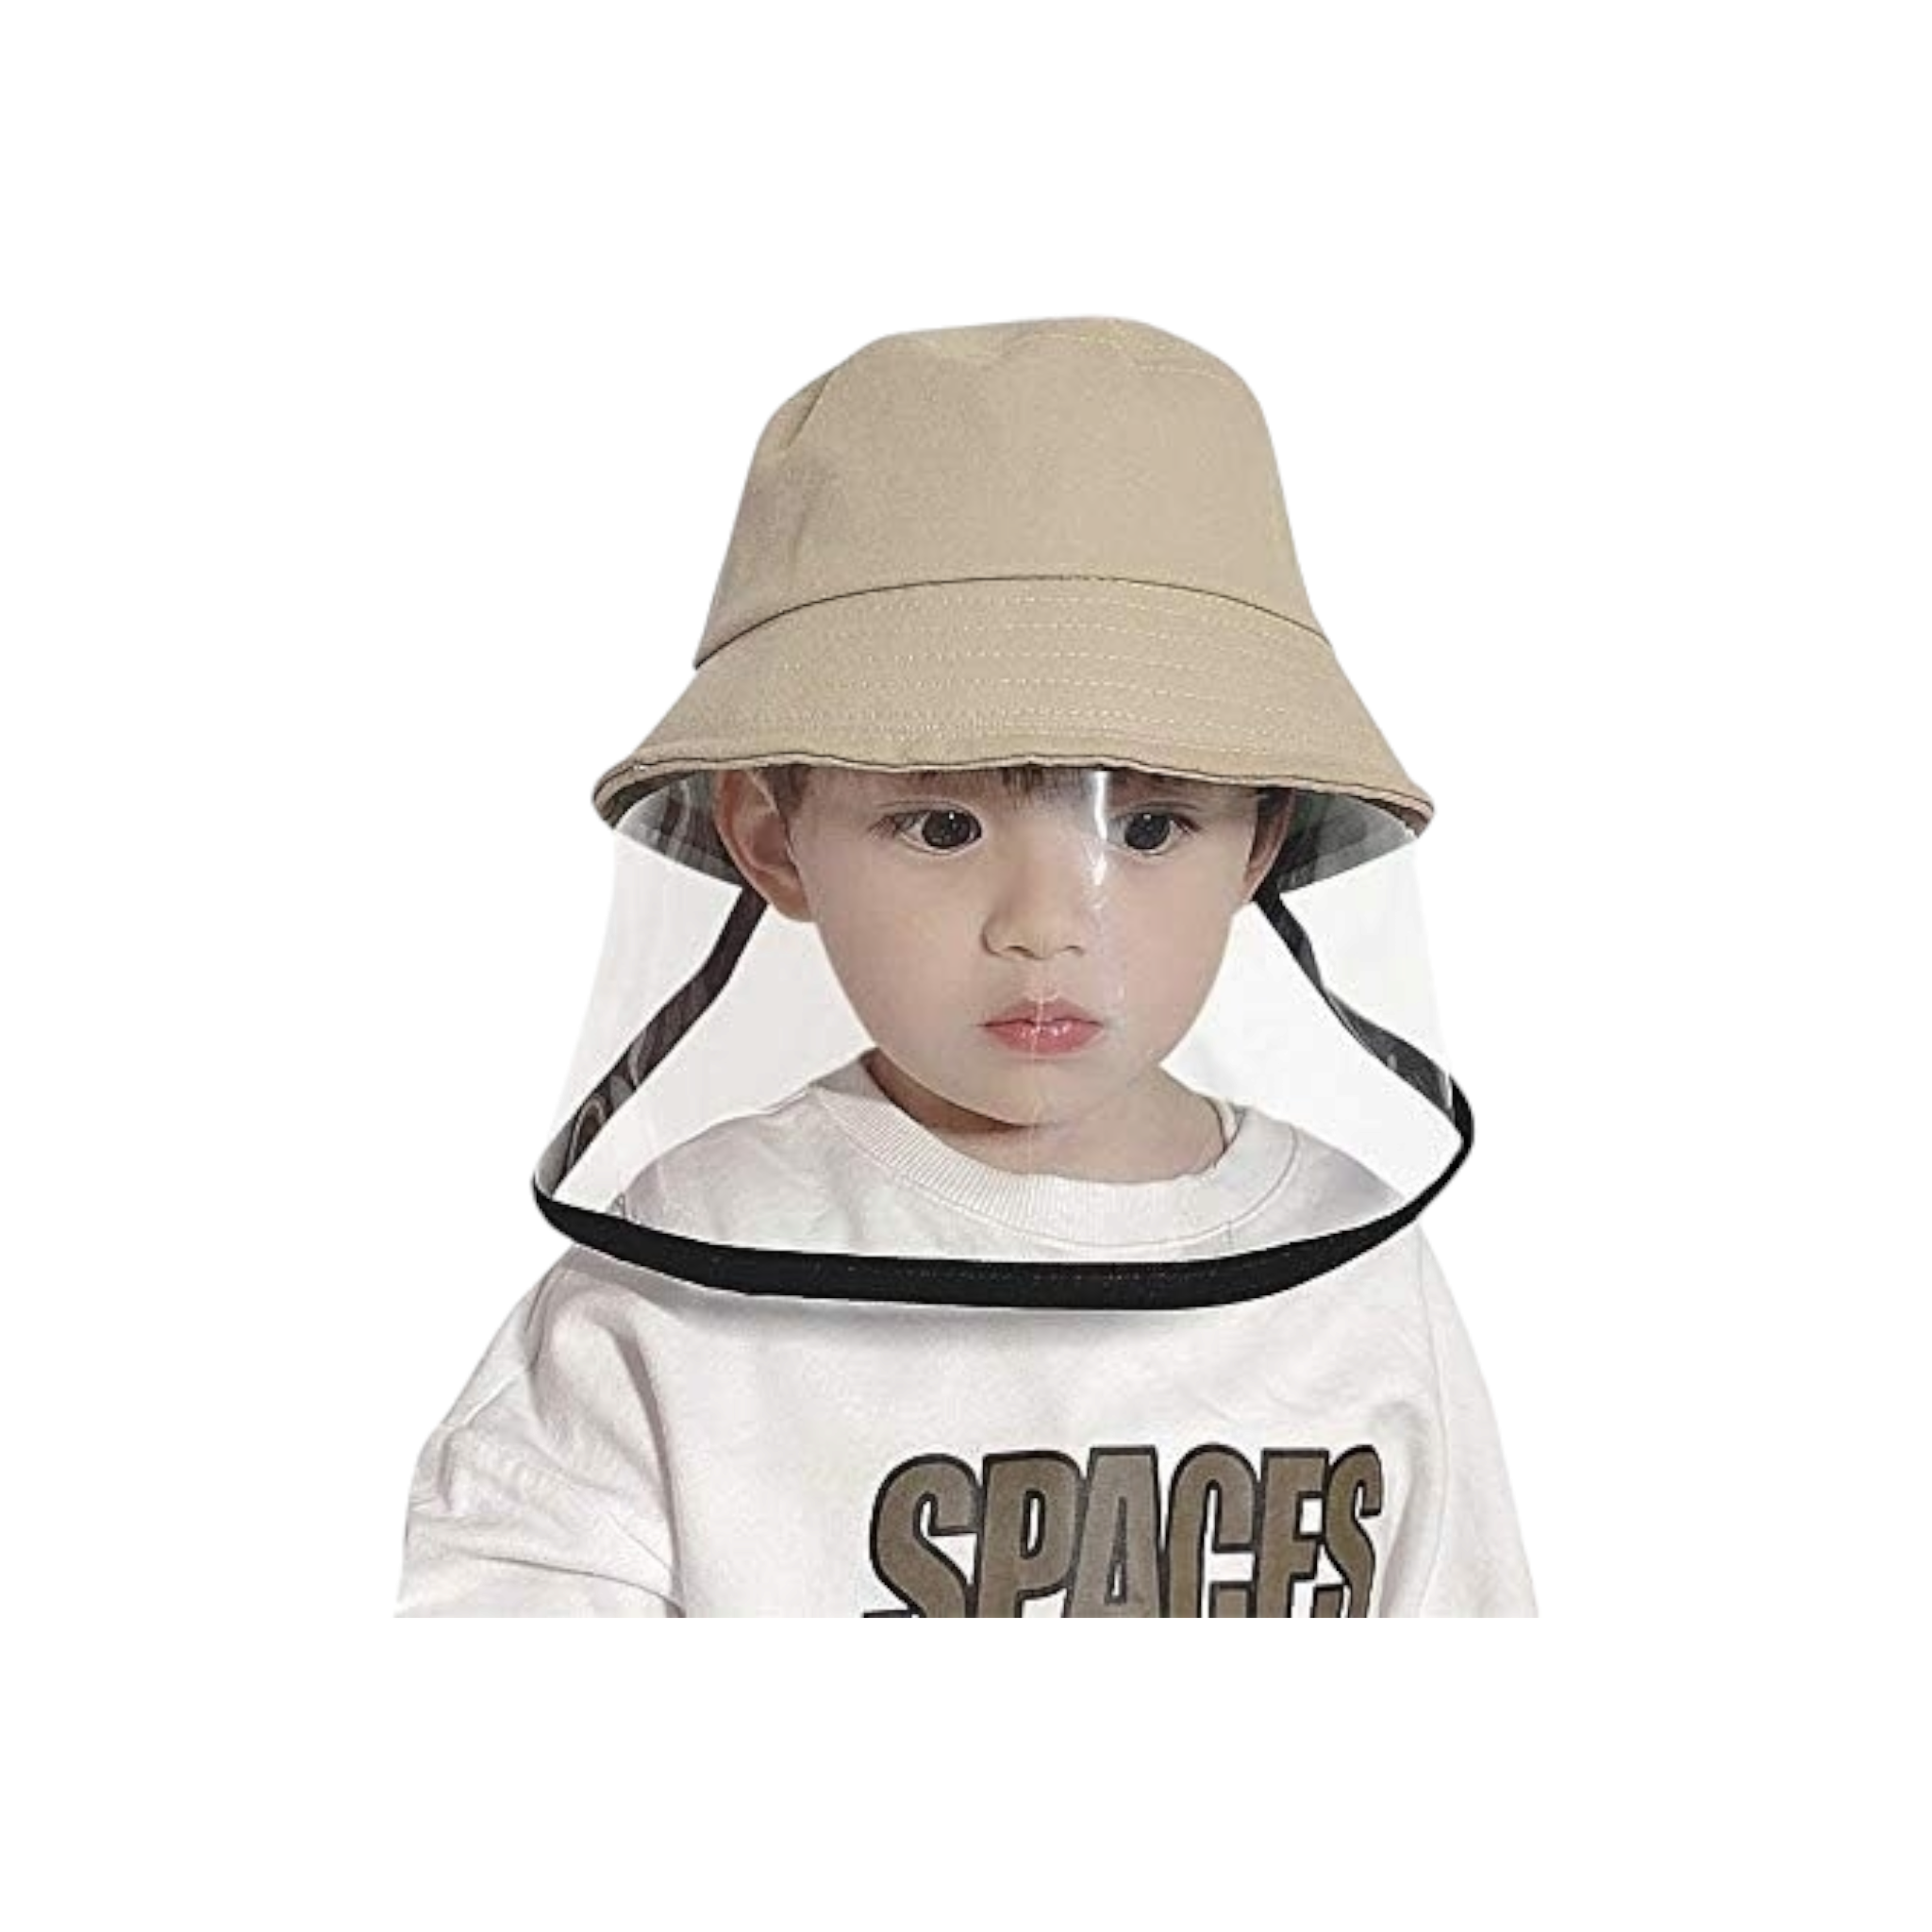 Kids Bucket Hat Bob with Face Shield Screen Anti Splash & Protection